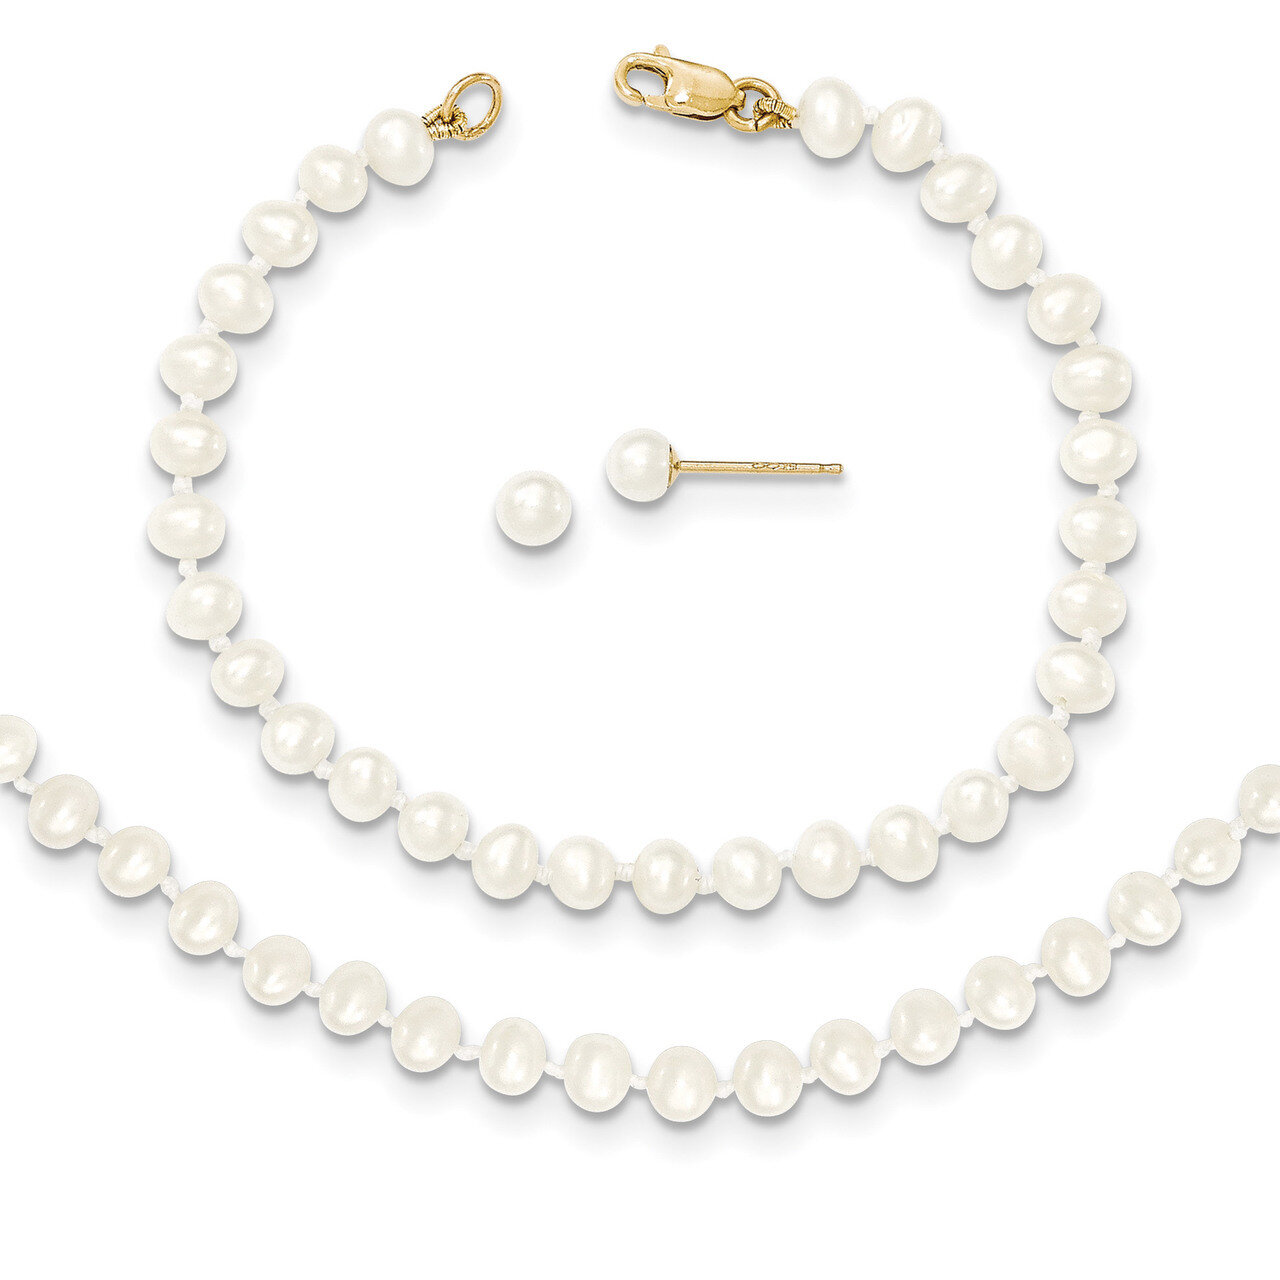 5 Inch 3-4mm Fresh Water Cultured Pearl 14in Necklace 5in. Bracelet Earring Set 14k Gold XF502SET